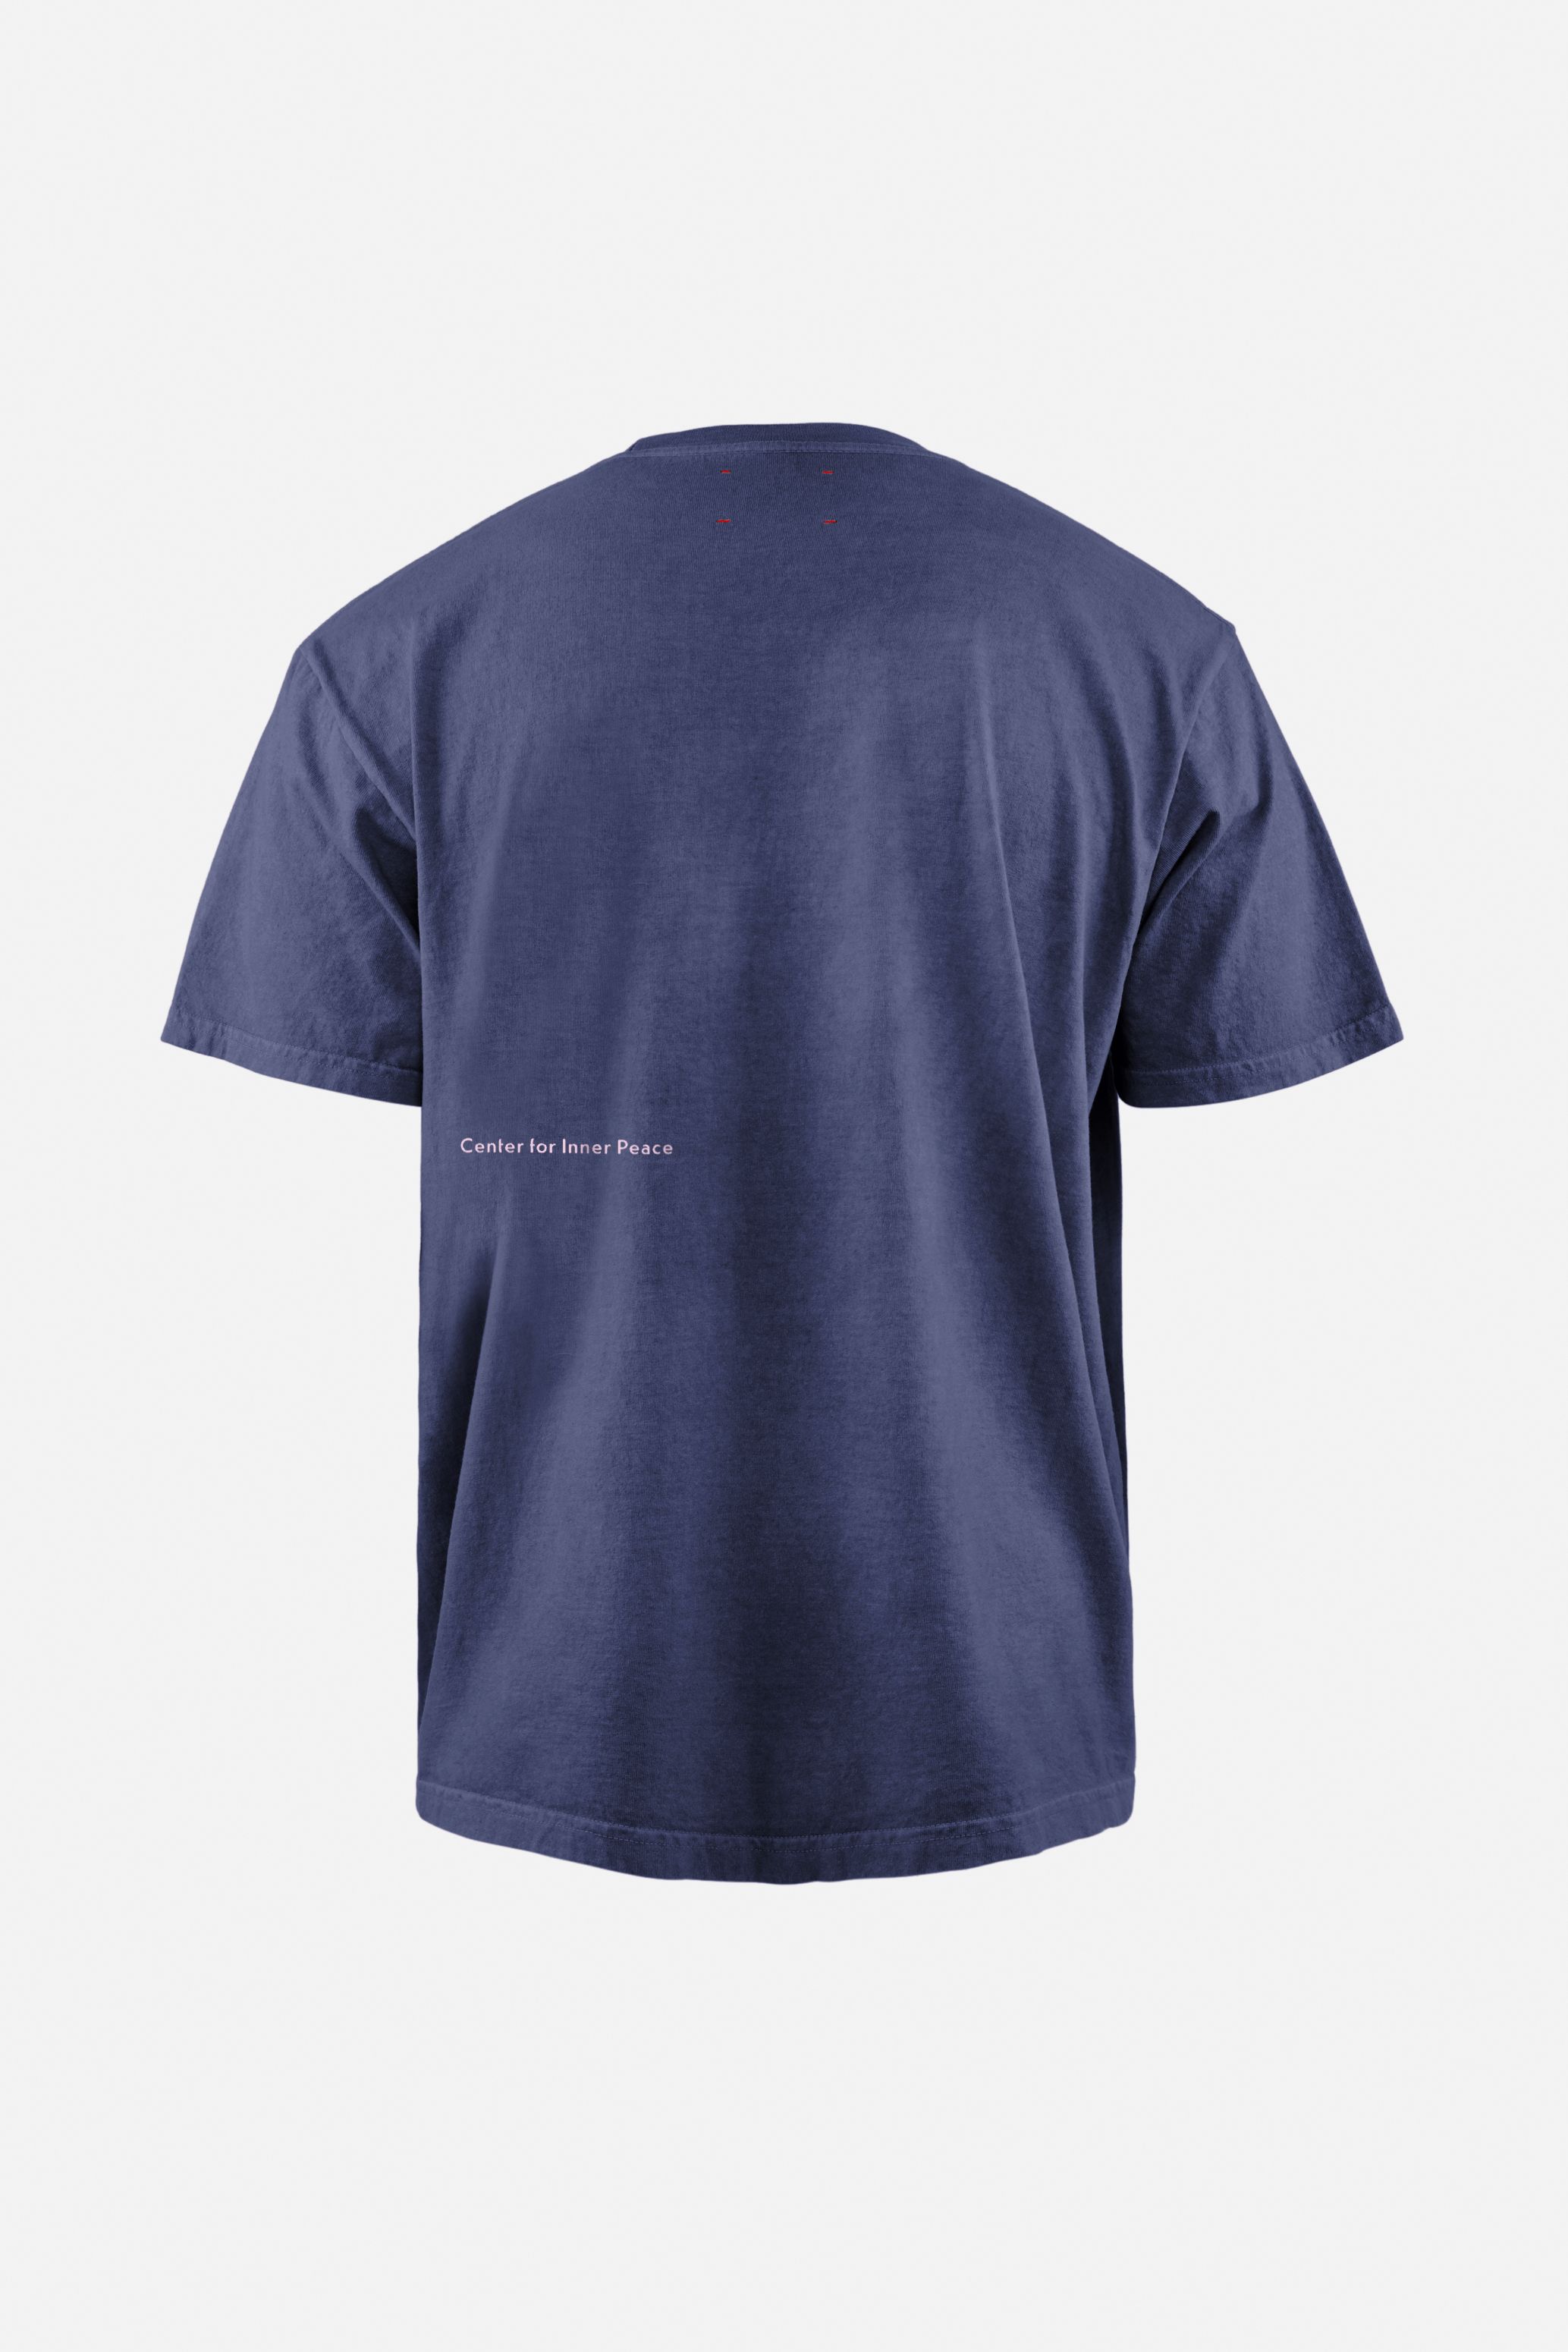 Karuna Short Sleeve T-Shirt, Navy Pigment